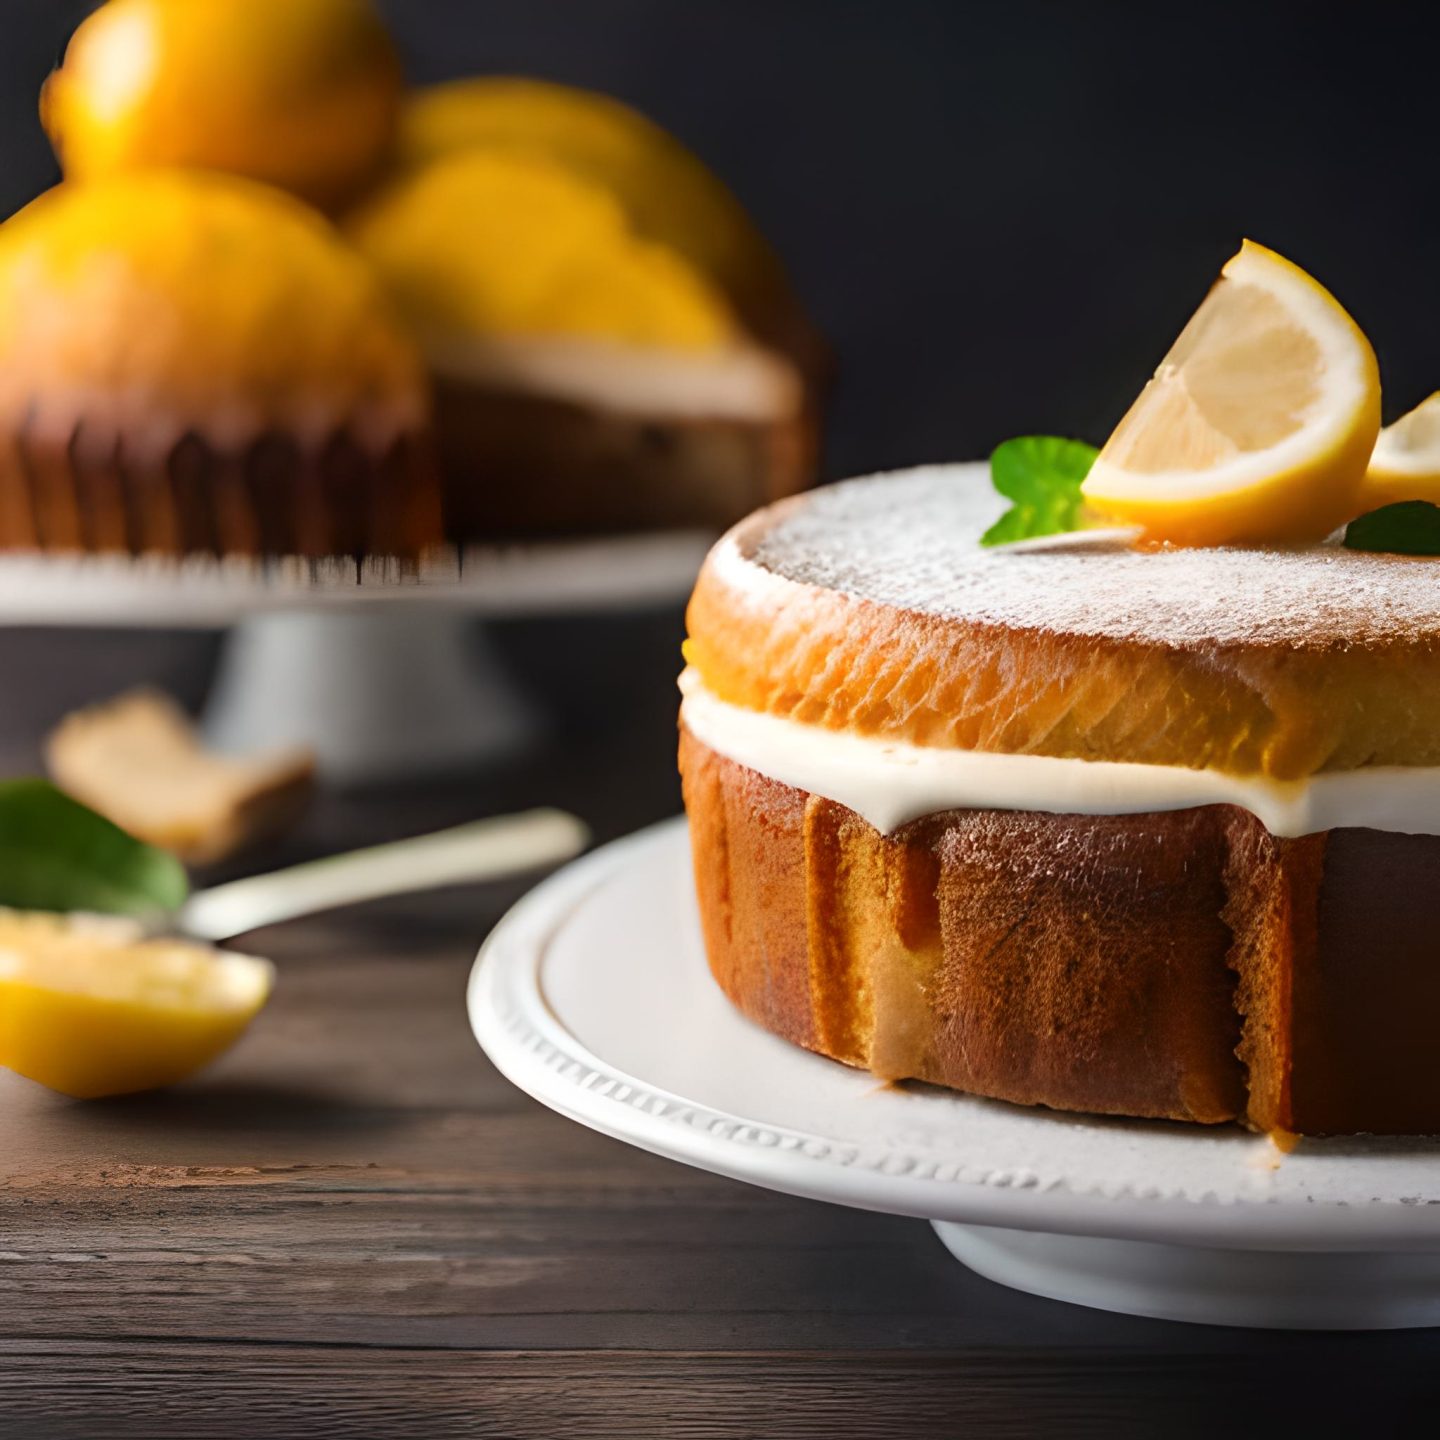 Lemon citrus cake, Zesty lemon cake, Lemon butter cake, Lemon poppy seed cake, Glazed lemon cake, Lemon sponge cake, Lemon cream cheese cake, Light lemon cake, Lemon raspberry cake, Old fashioned lemon cake, Lemon crumb cake, Lemon frosting, Lemon meringue cake, Lemony cake, 